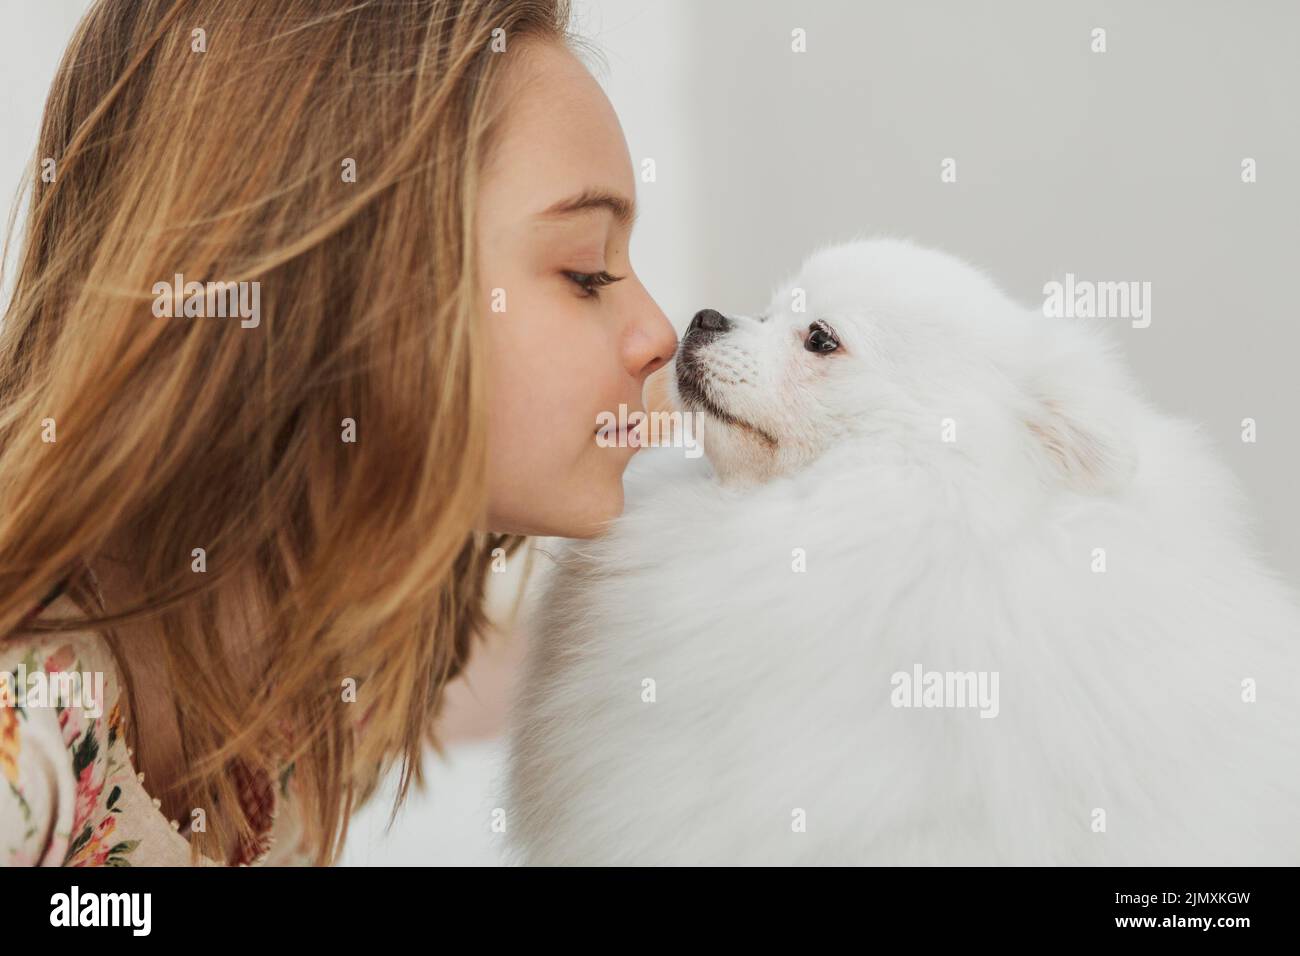 Girl dog touching noses Stock Photo